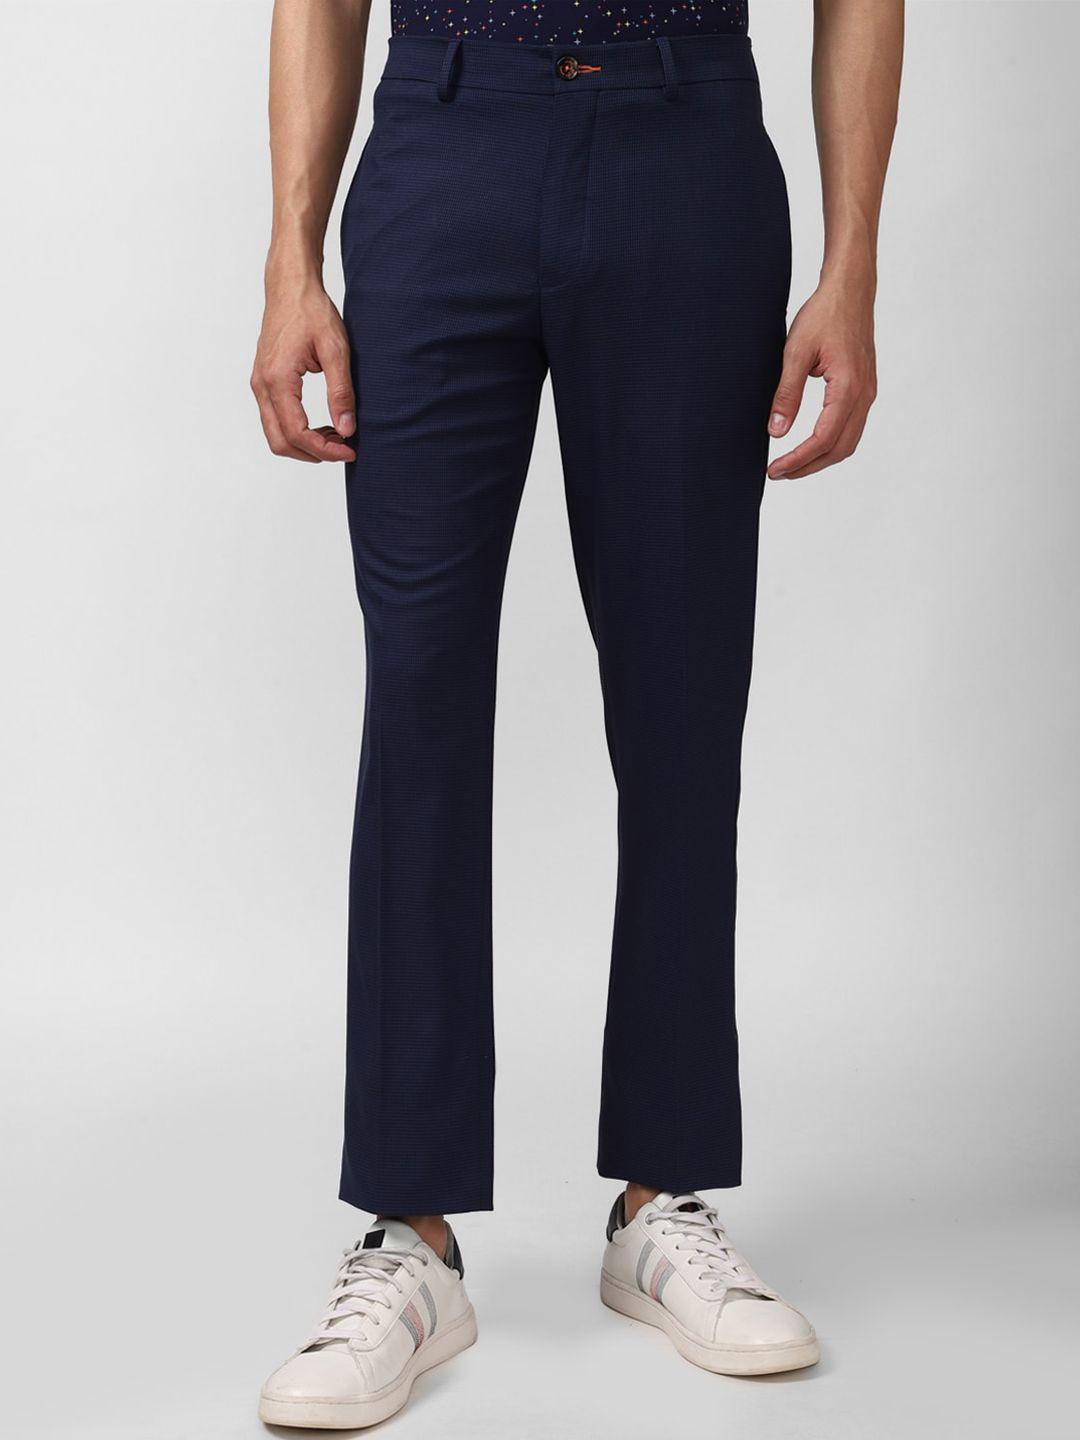 simon-carter-london-men-navy-blue-printed-slim-fit-chinos-trousers